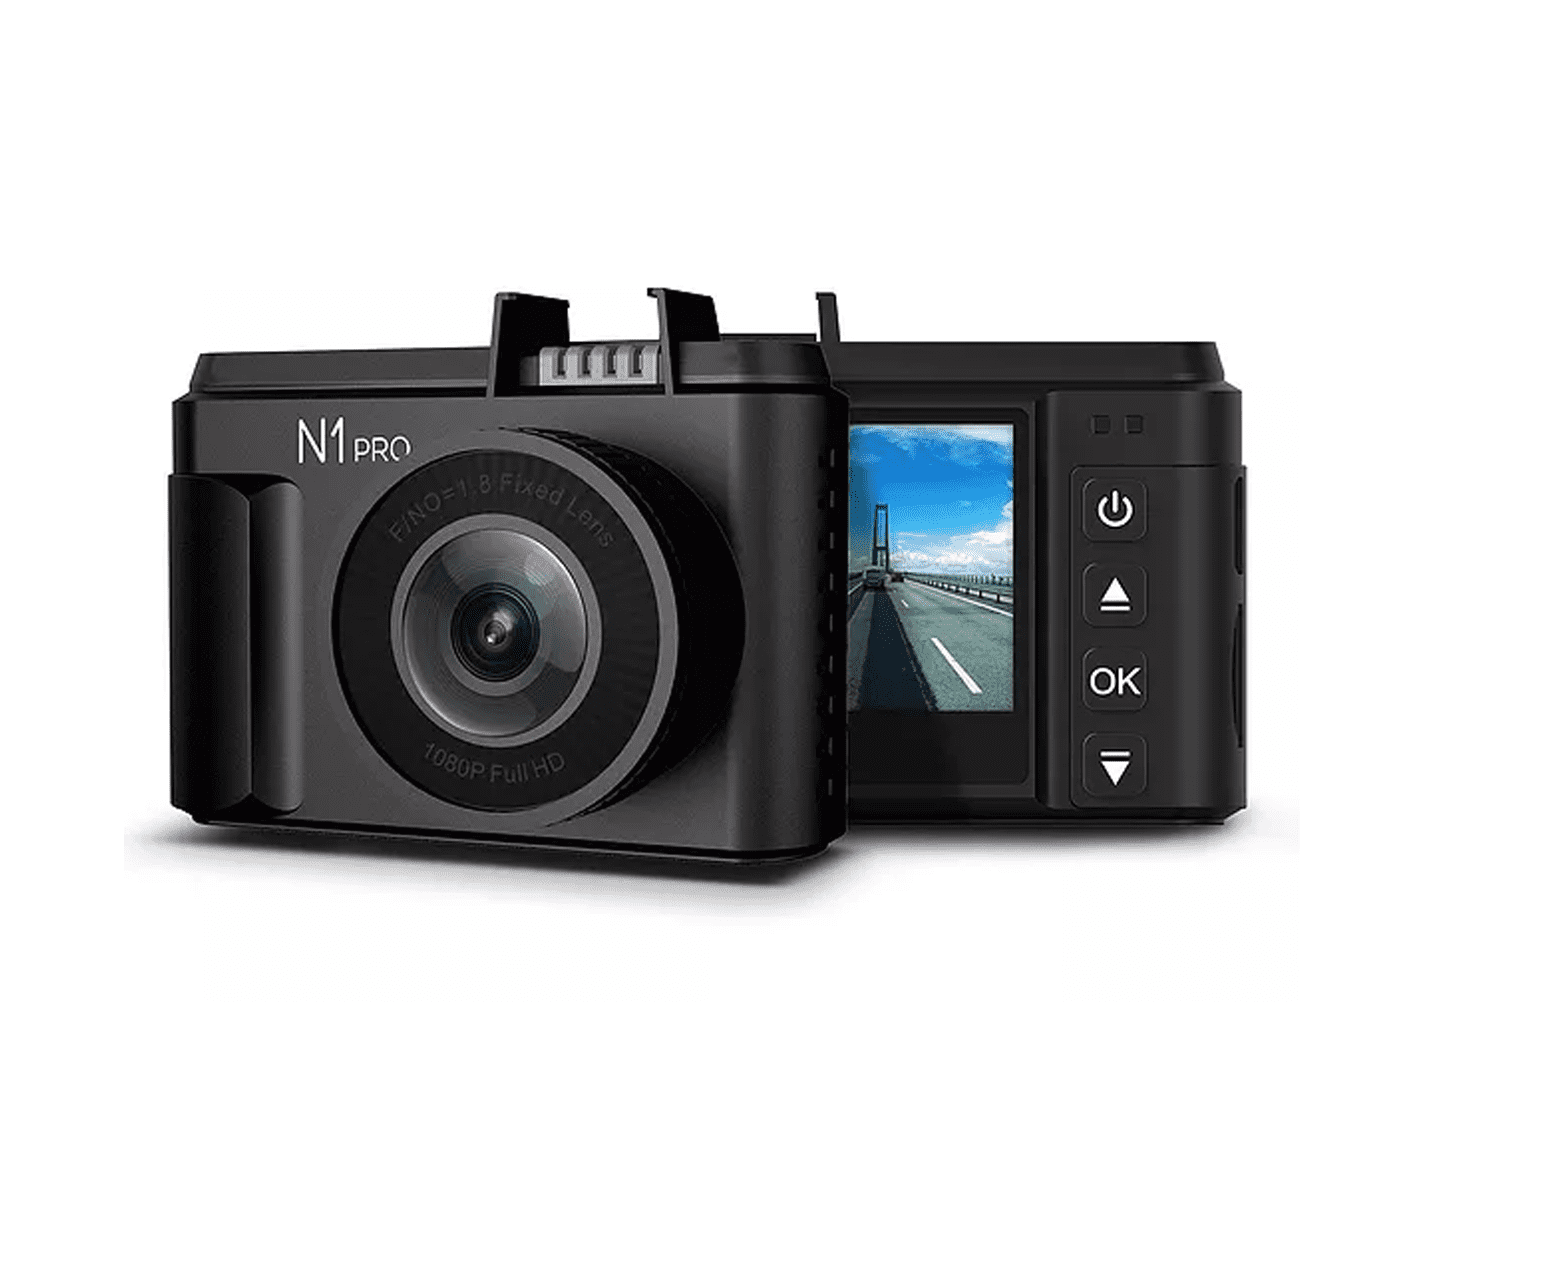 Kamera samochodowa Vantrue N1 Pro 1080p (ostatnia jednostka!!!)